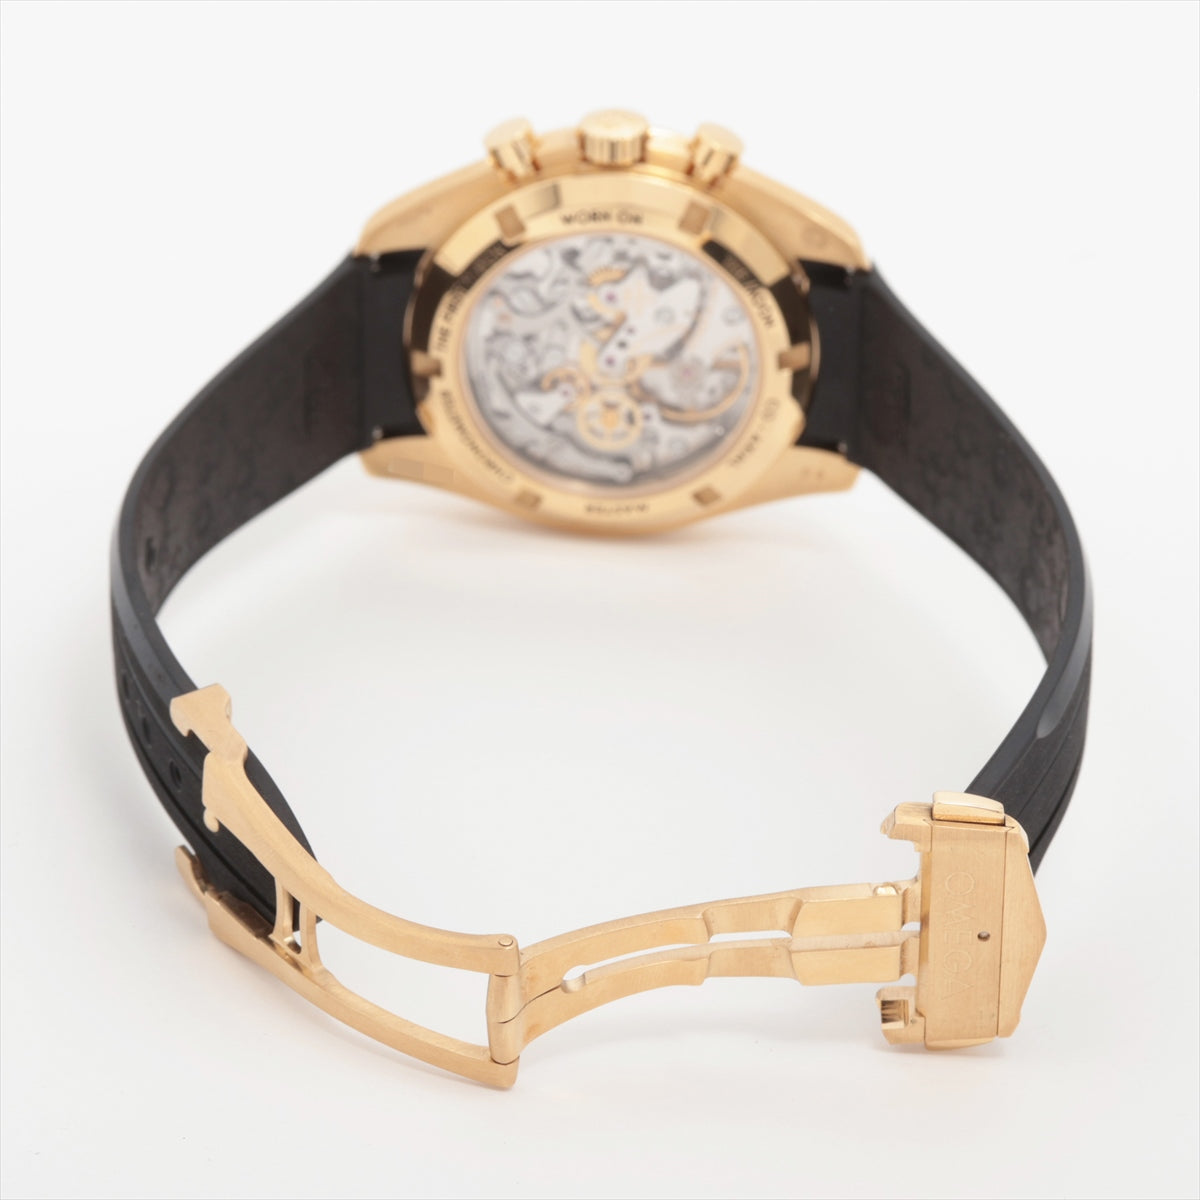 Omega Speedmaster Moonwatch Professional Chronograph 310.62.42.50.99.001 YG & rubber Stem-winder Gold dial